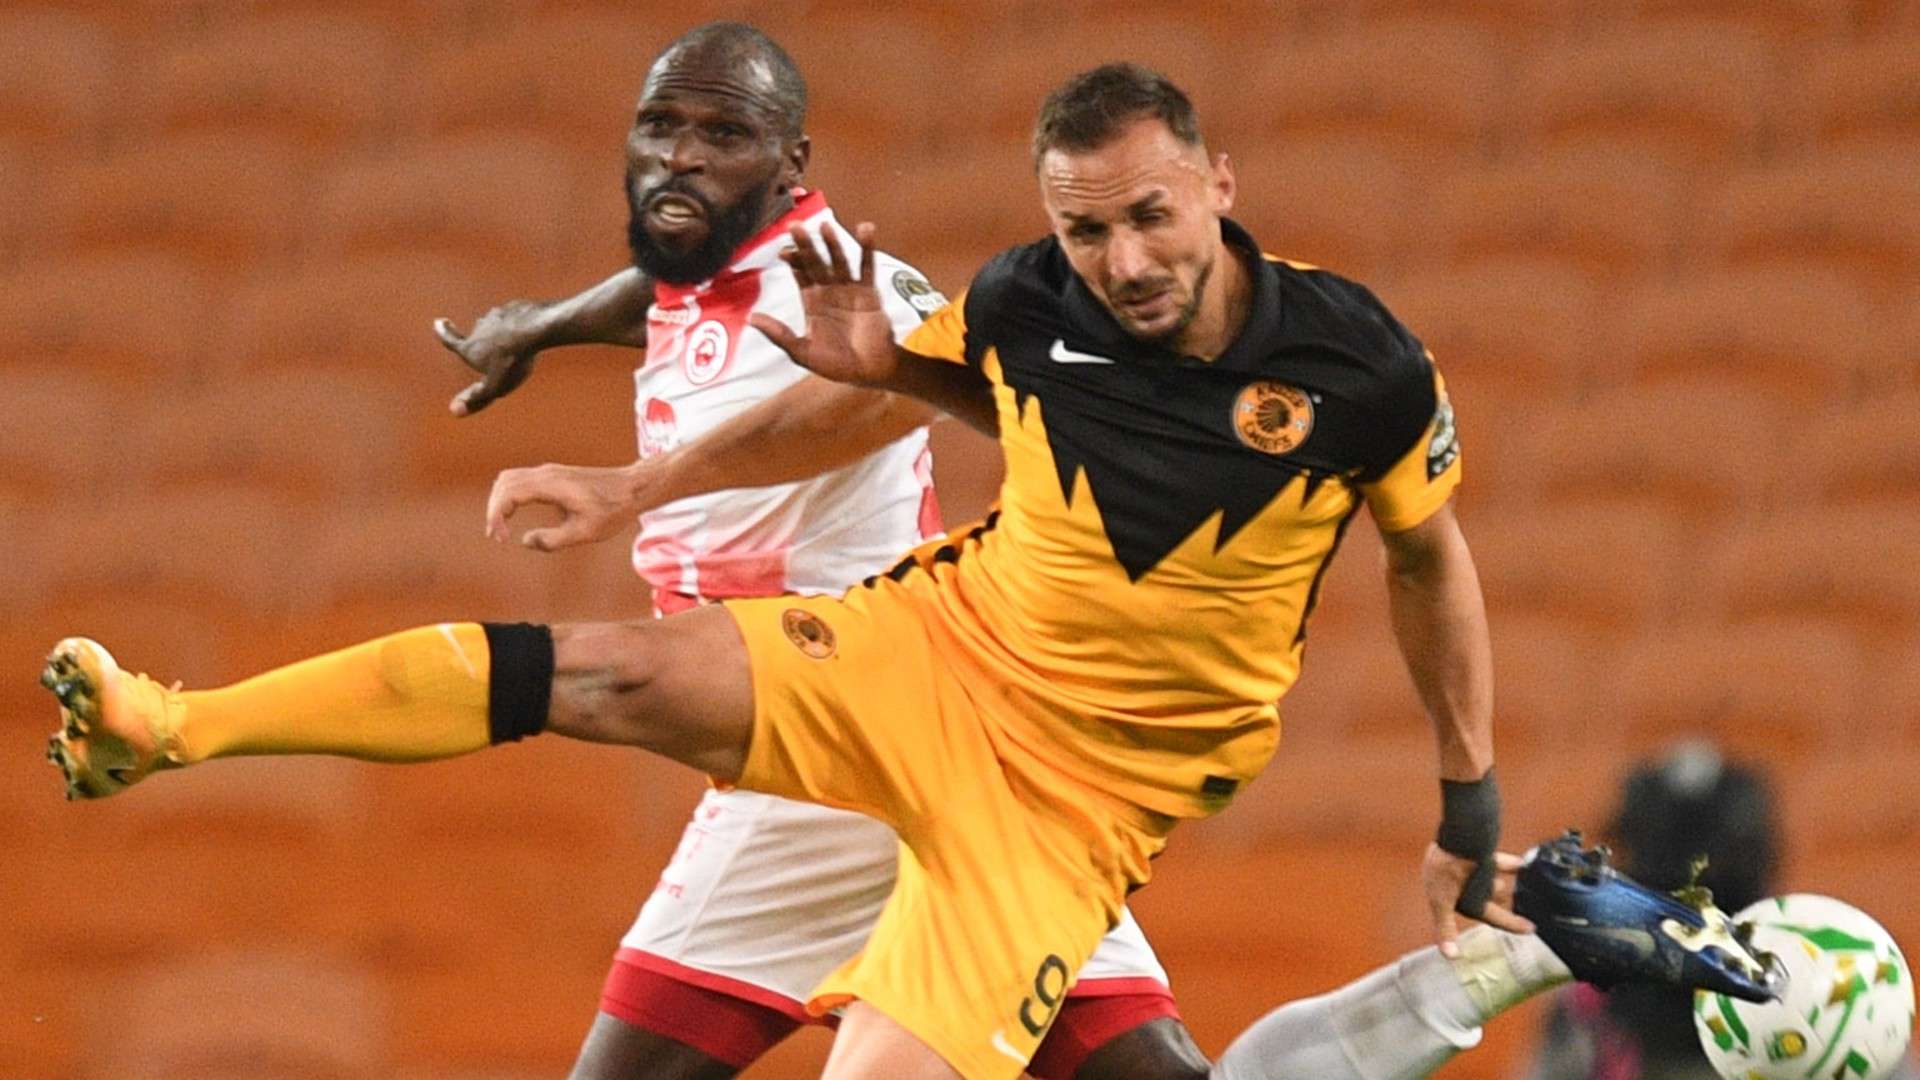 Joash Onyango of Simba SC vs Samir Nurkovic of Kaizer Chiefs.